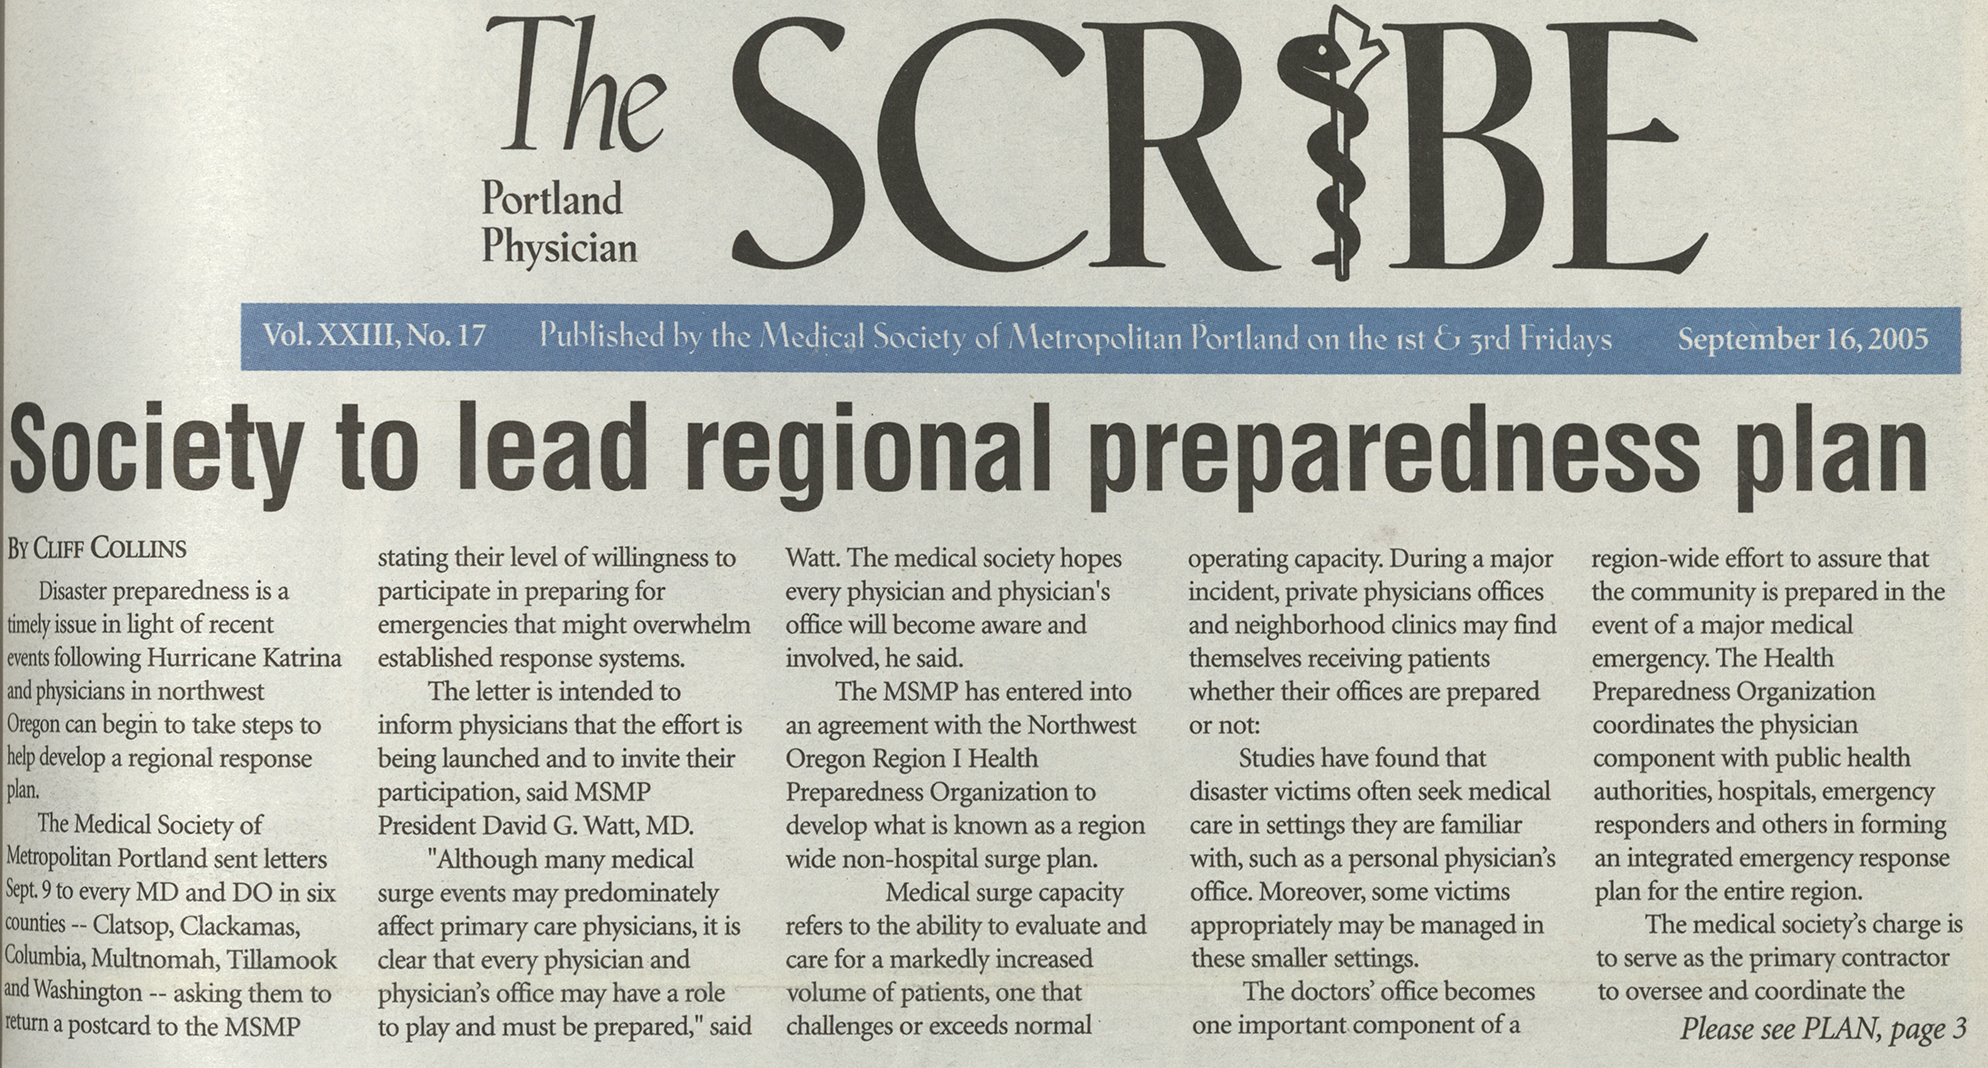 The Scribe cover story: "Society to lead regional preparedness plan"